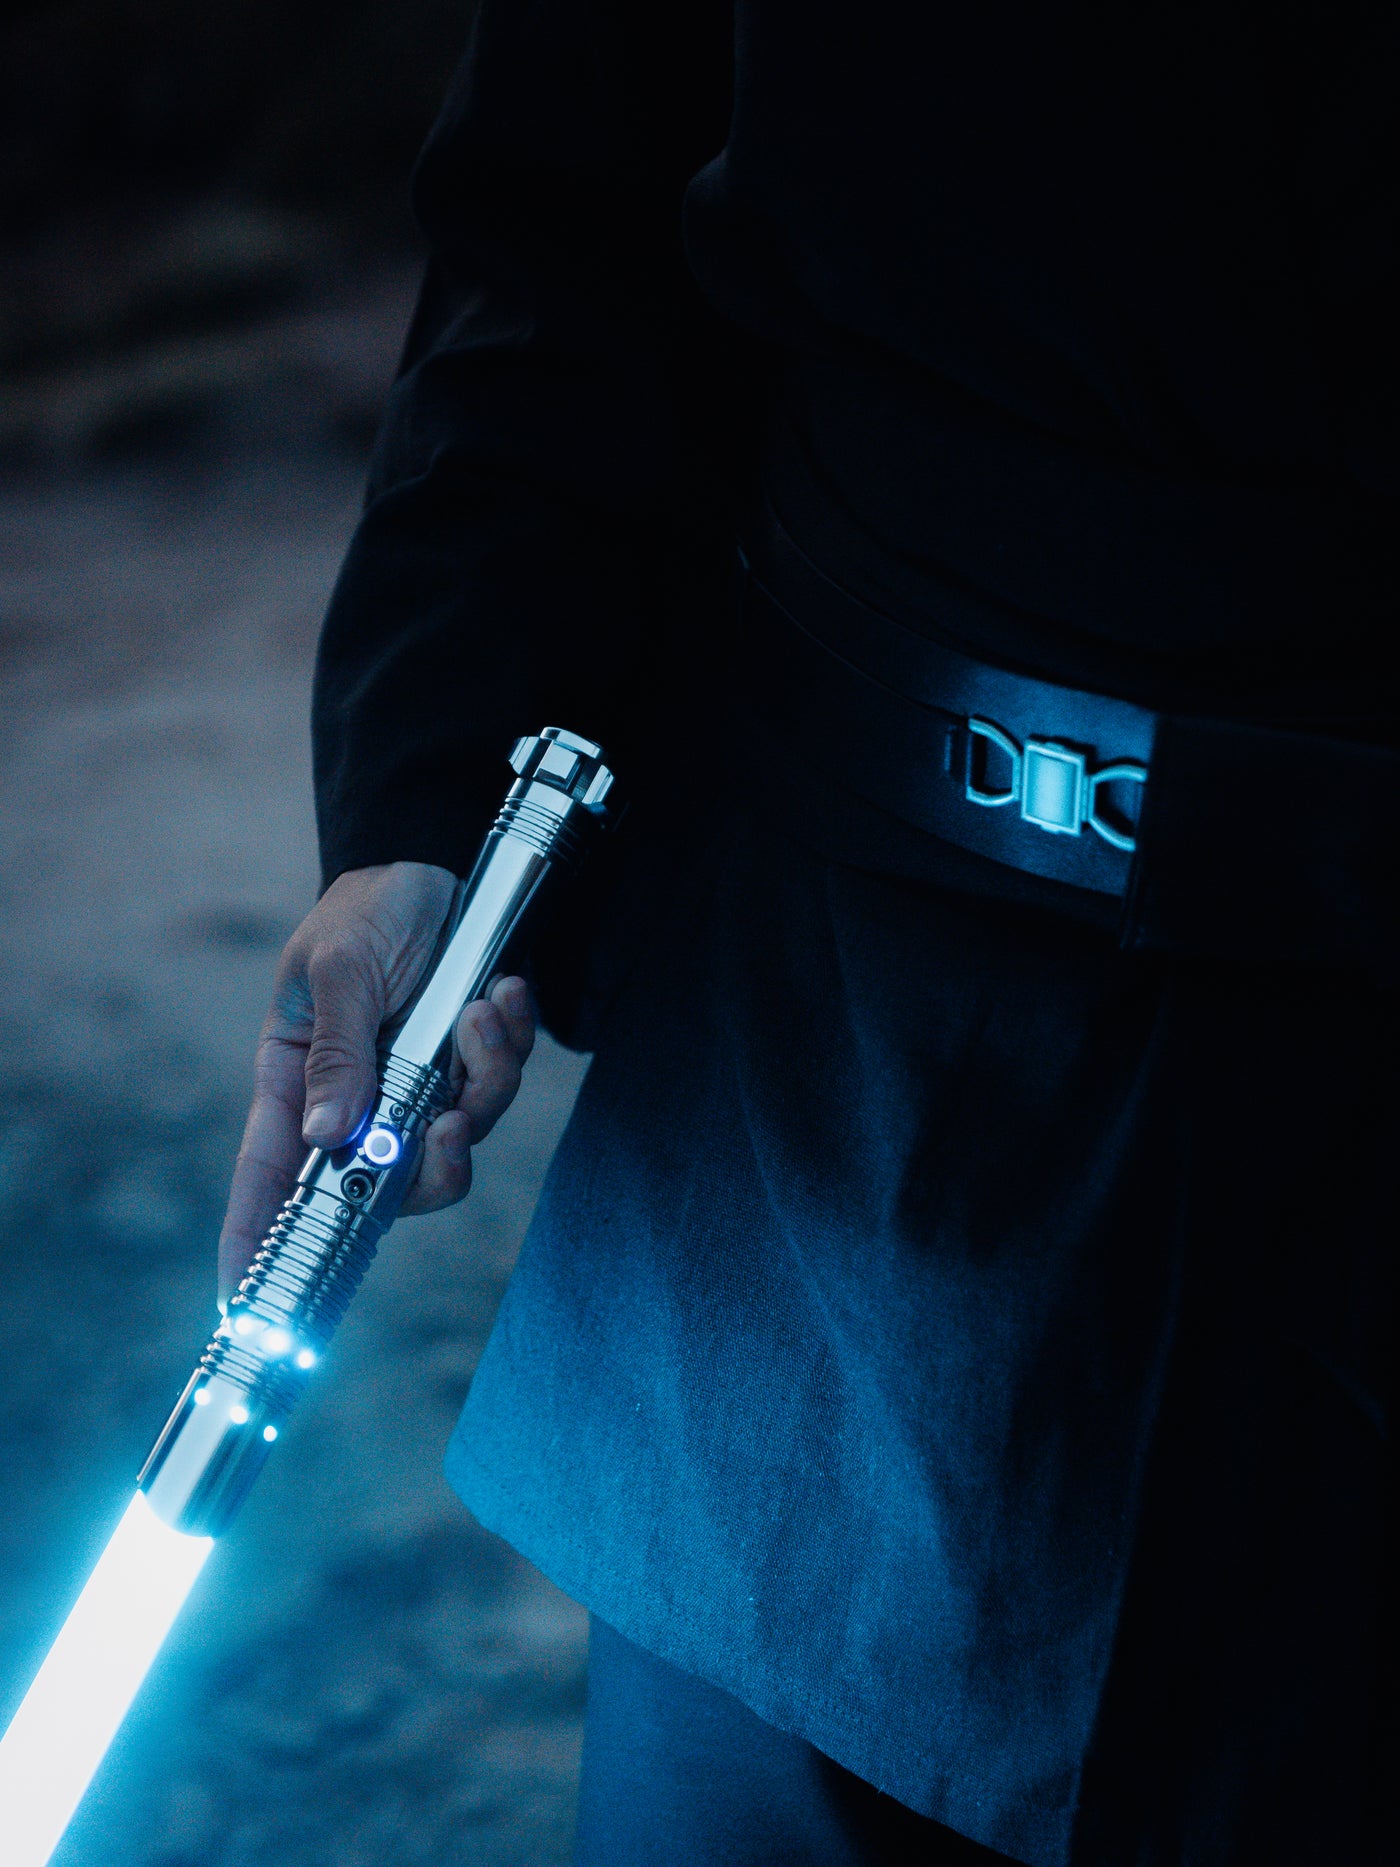 Silverlight - KenJo Sabers - Premium RGB Baselit - Star Wars Lightsaber replica Jedi Sith - Best sabershop Europe - Nederland light sabers kopen -